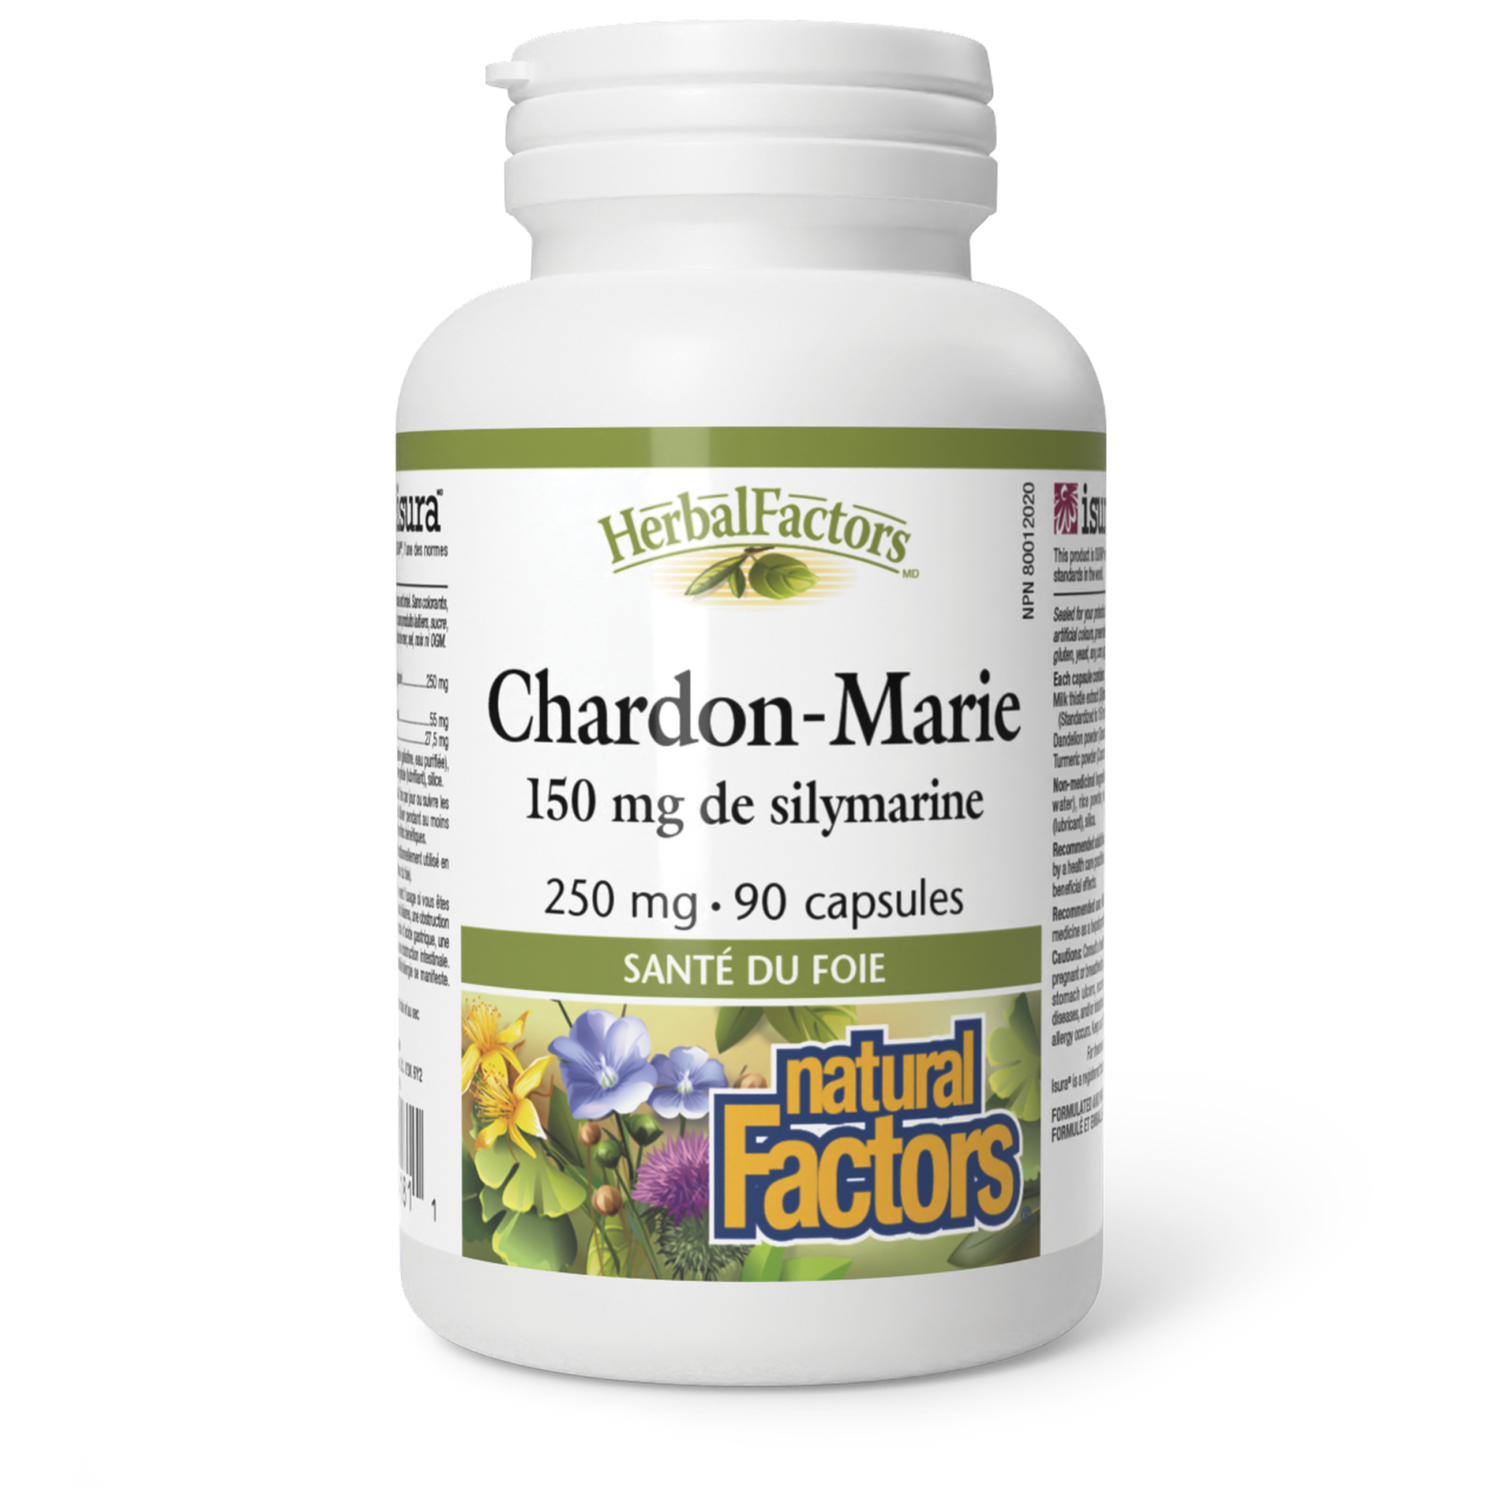 Chardon-Marie 250 mg/150 mg de silymarine, HerbalFactors, Natural Factors|v|image|4181